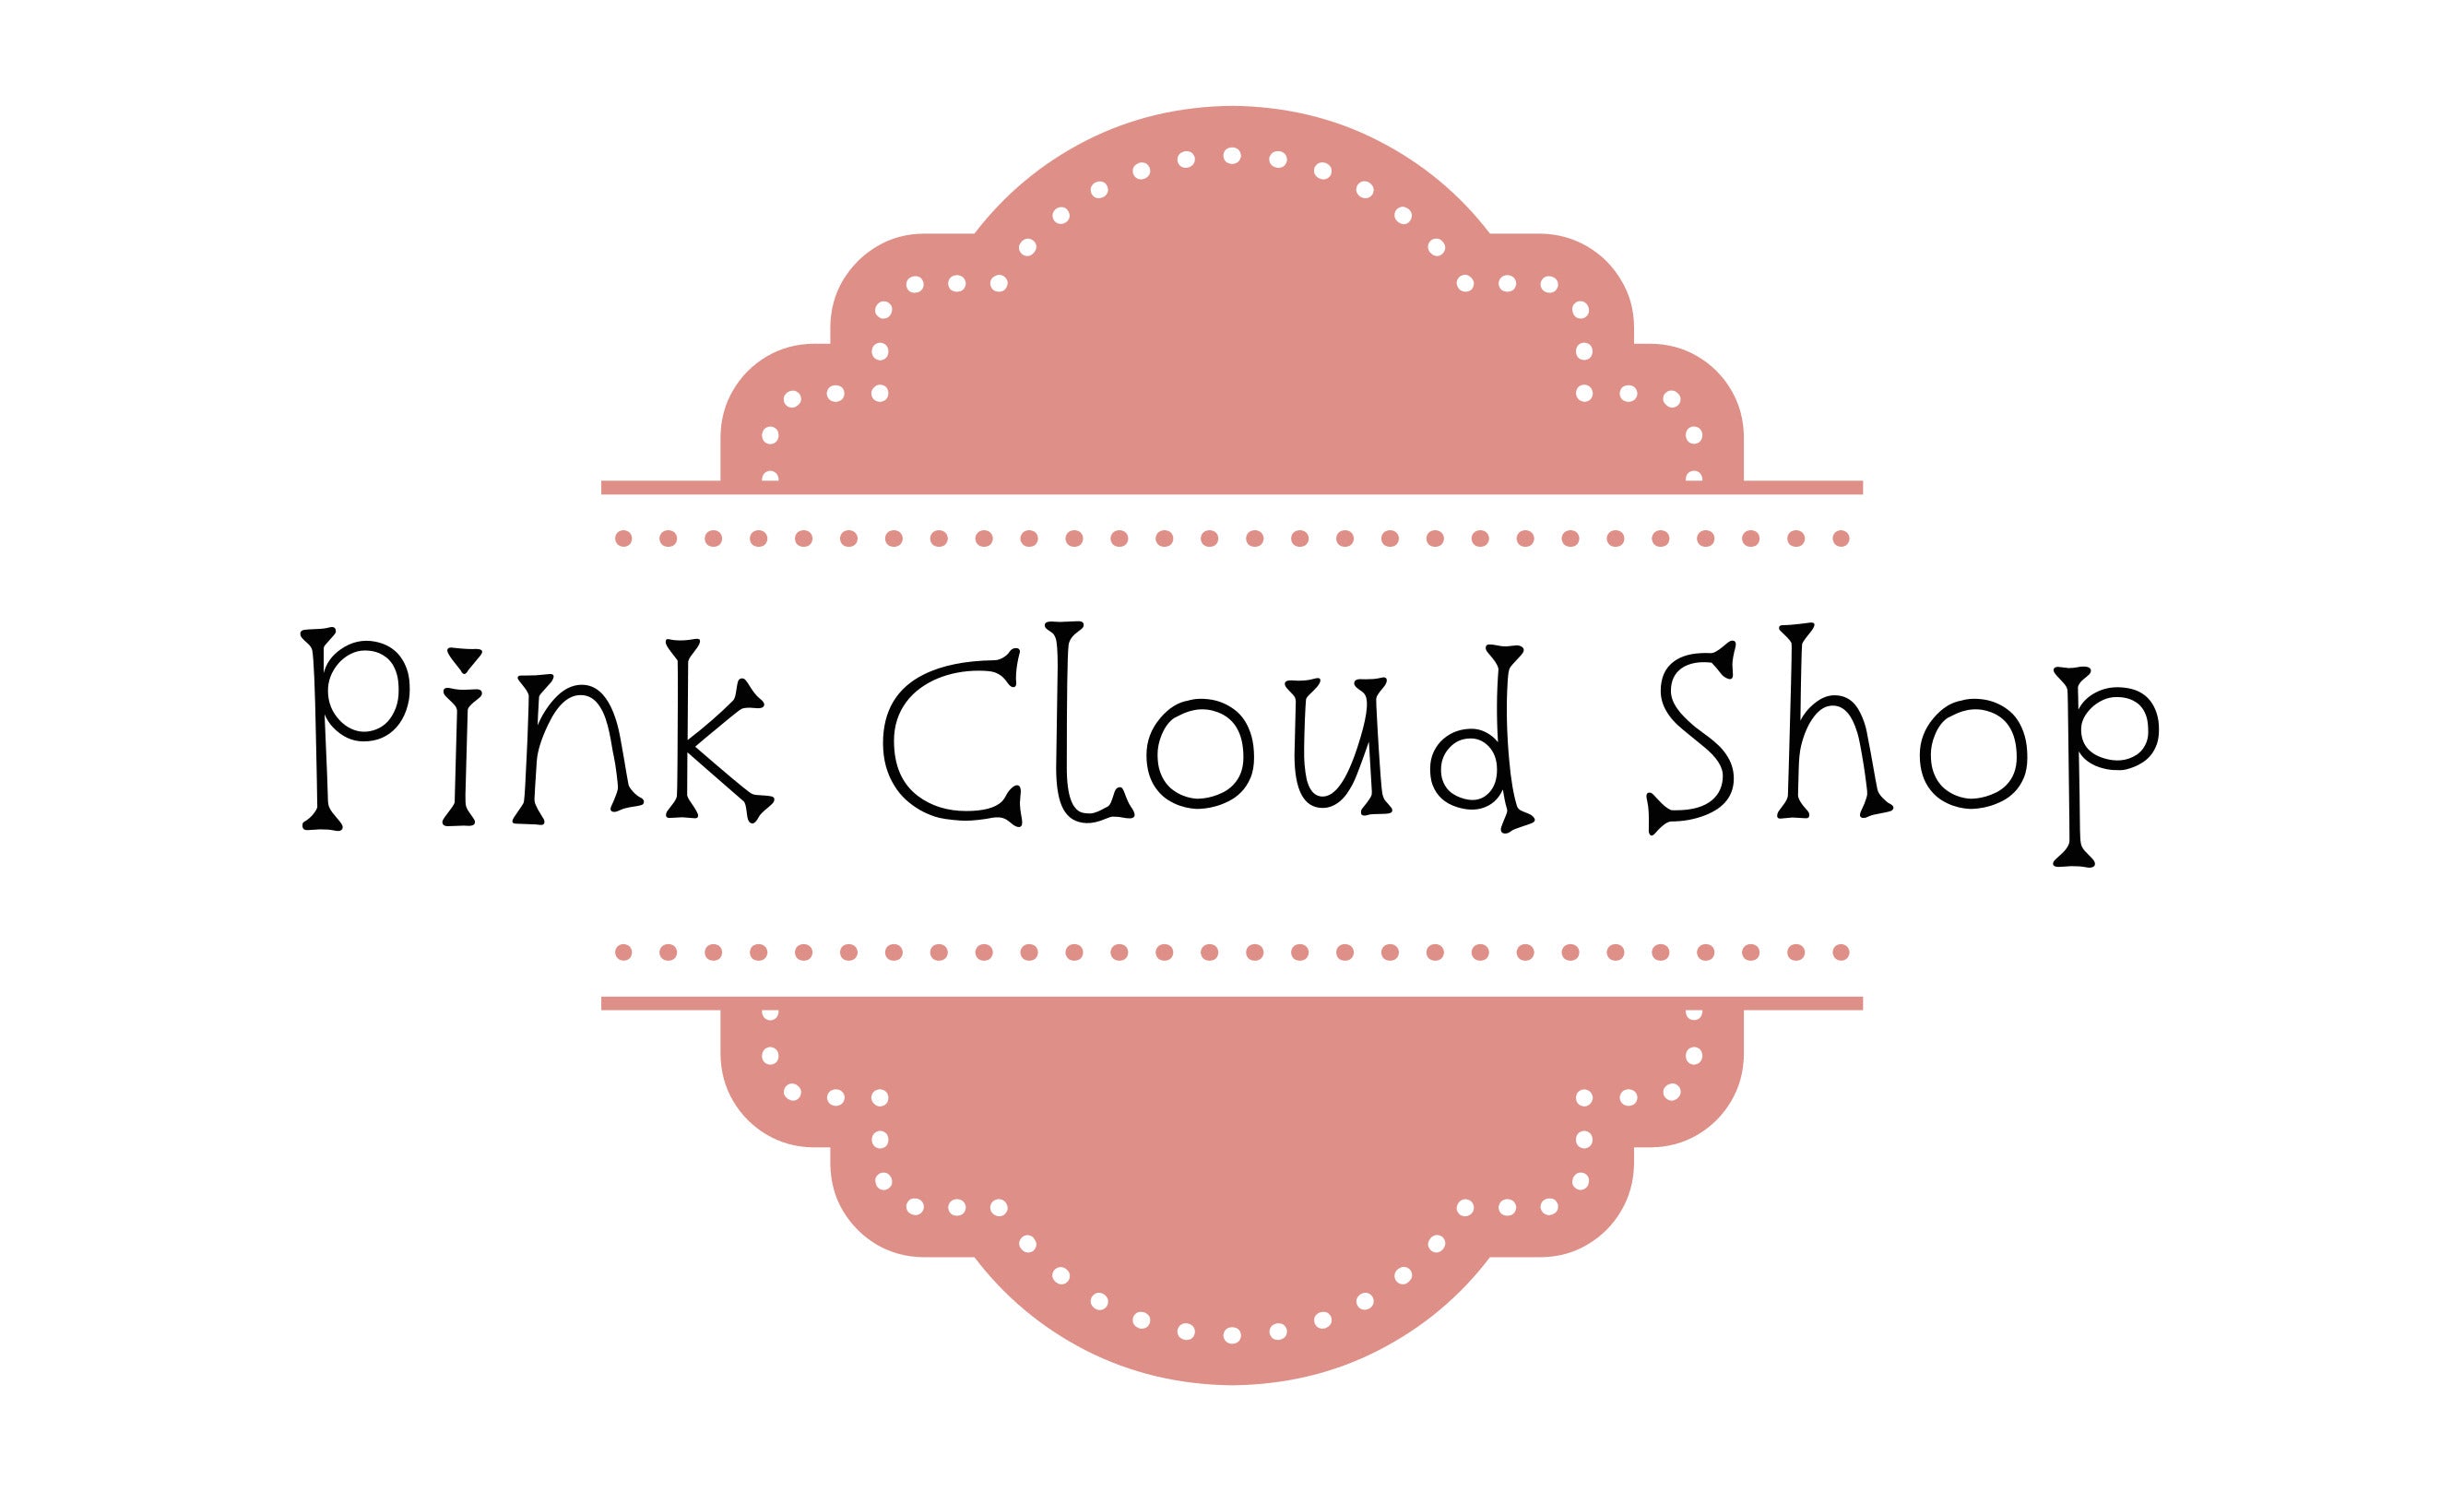 Бутик облако. CLOUDSHOP логотип. Клауд шоп. Cloud shop. Магазин облако Артемовский.